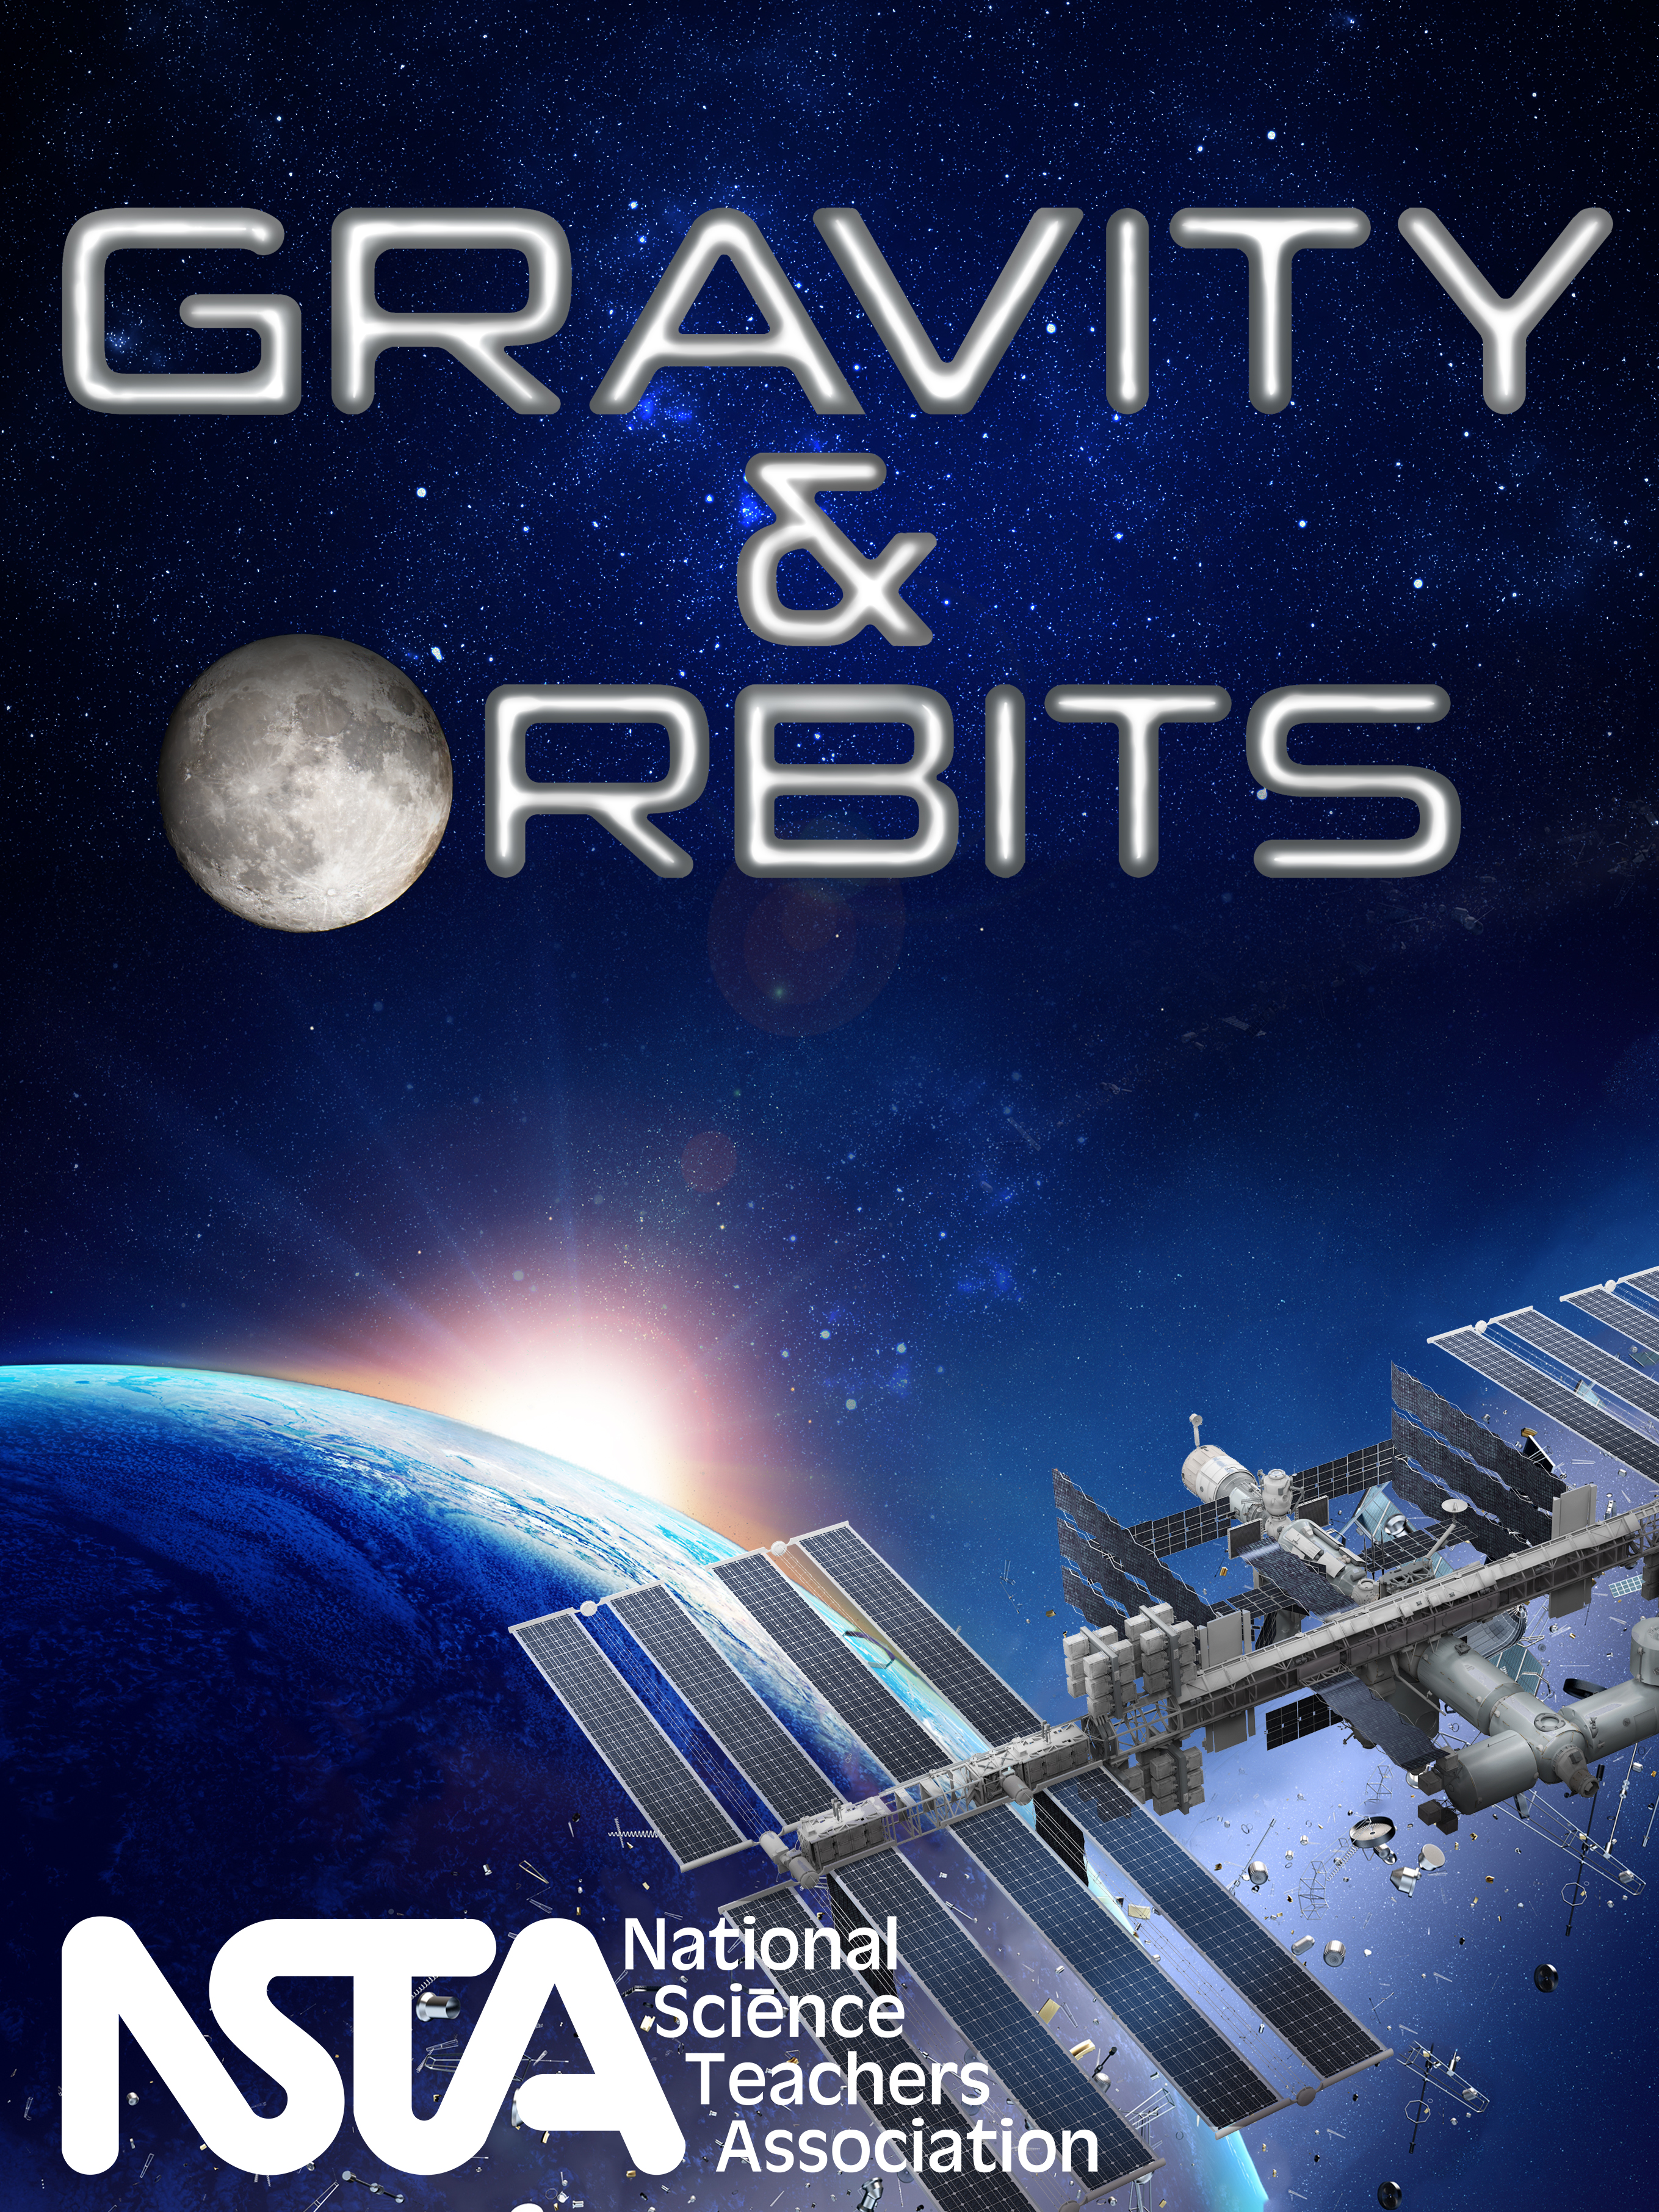 Gravity and Orbits